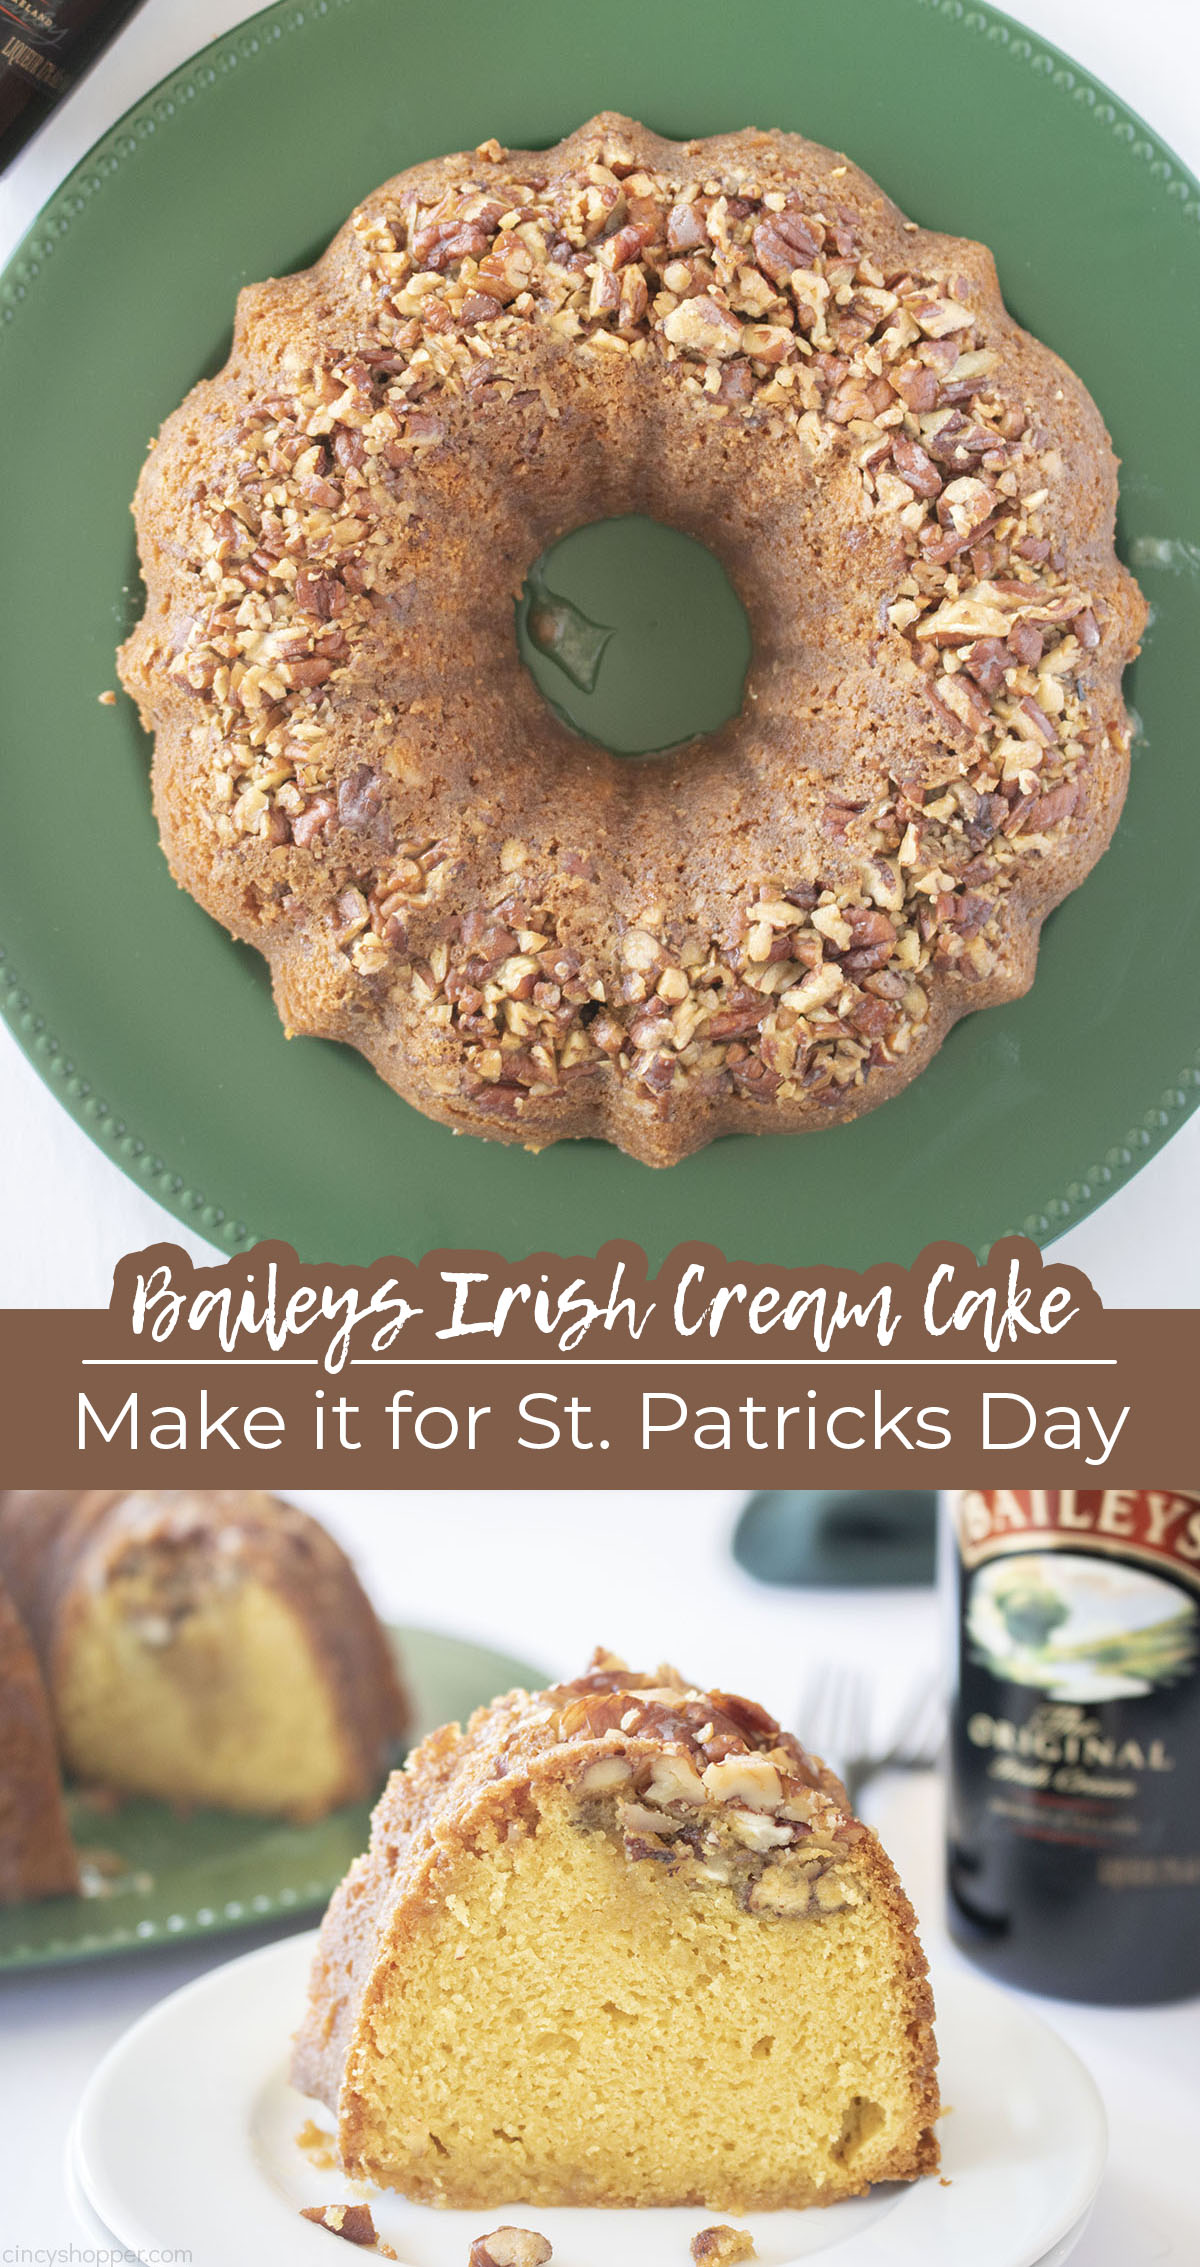 Long pin Text on image Baileys Irish Cream Cake- Make it for St. Patricks Day.